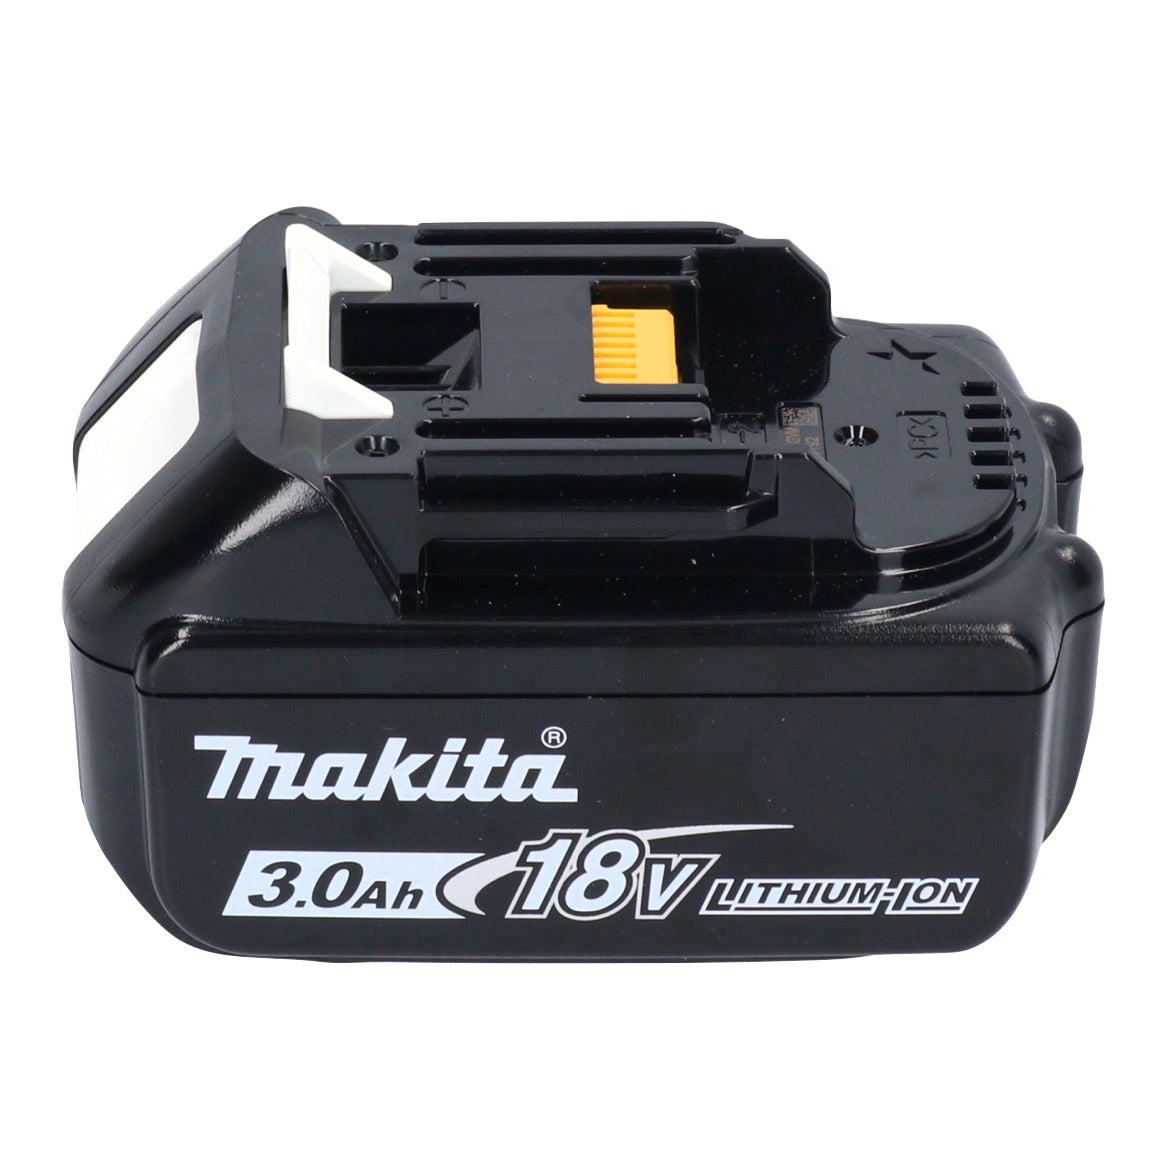 Makita DHP 489 F1 Akku Schlagbohrschrauber 18 V 73 Nm Brushless + 1x Akku 3,0 Ah - ohne Ladegerät